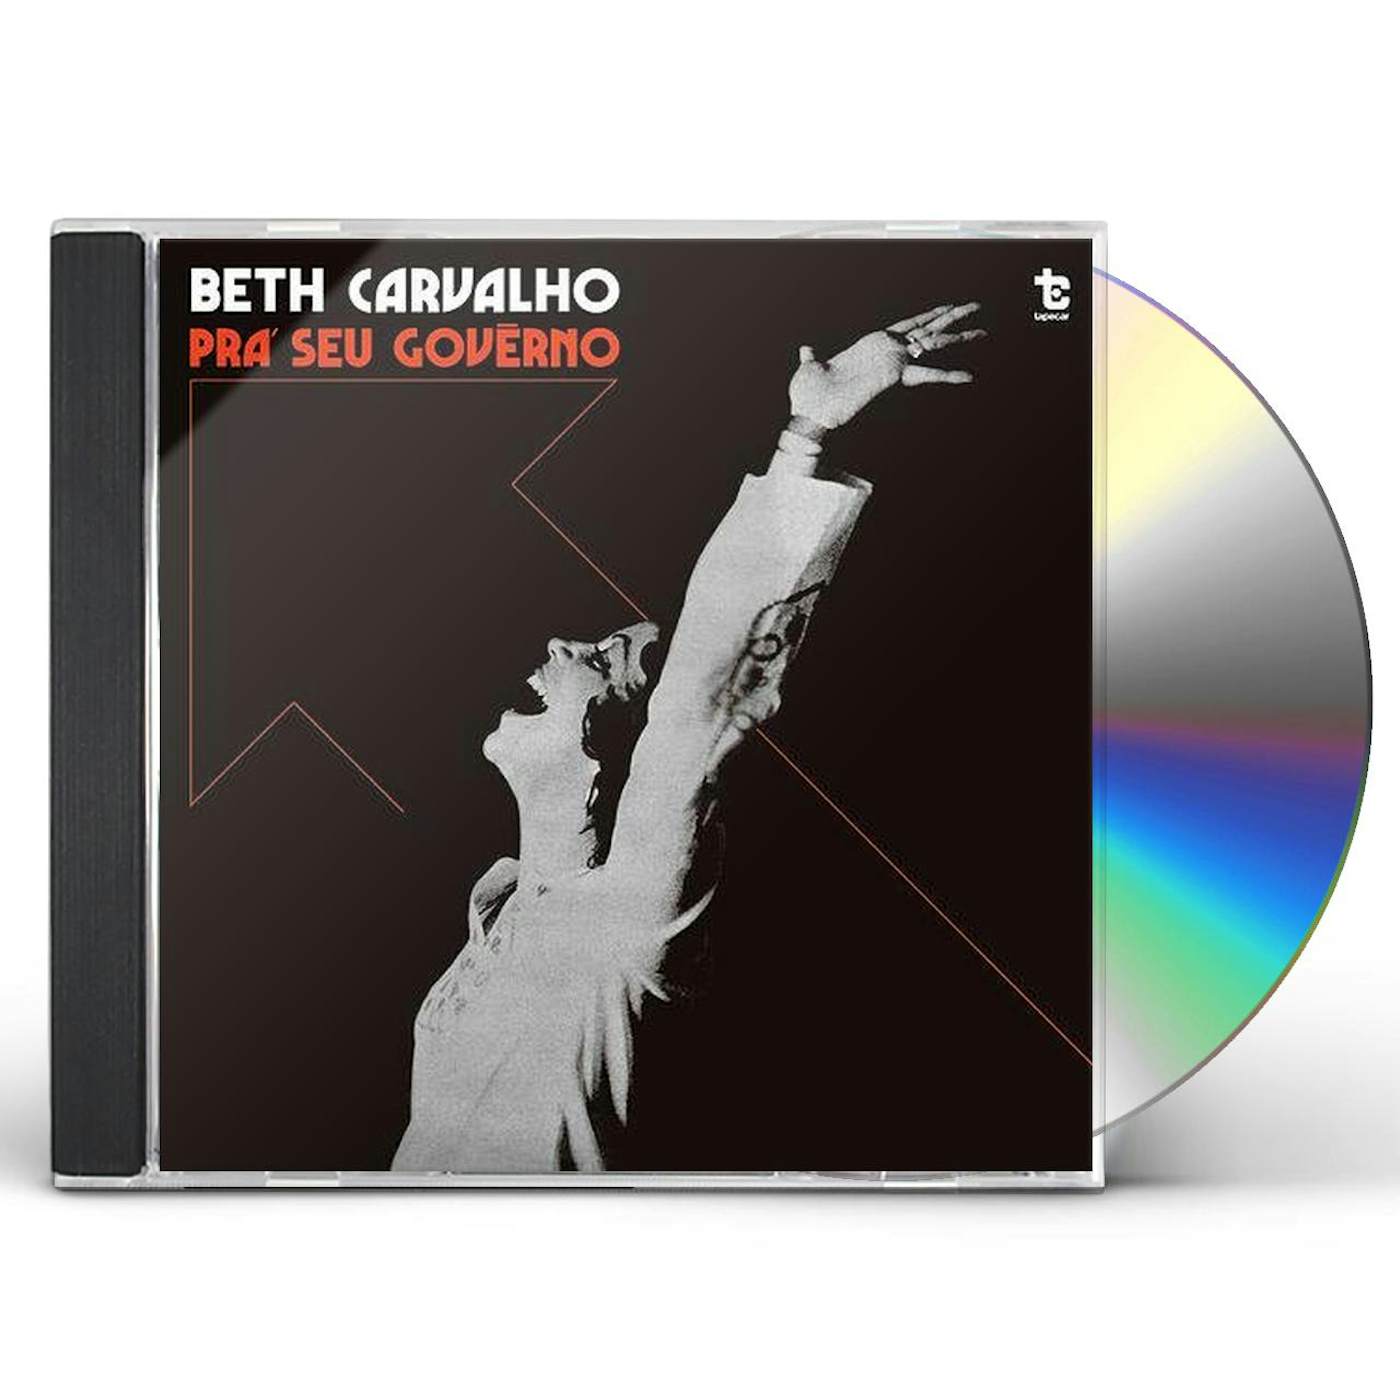 Beth Carvalho PRA SEU GOVERNO CD